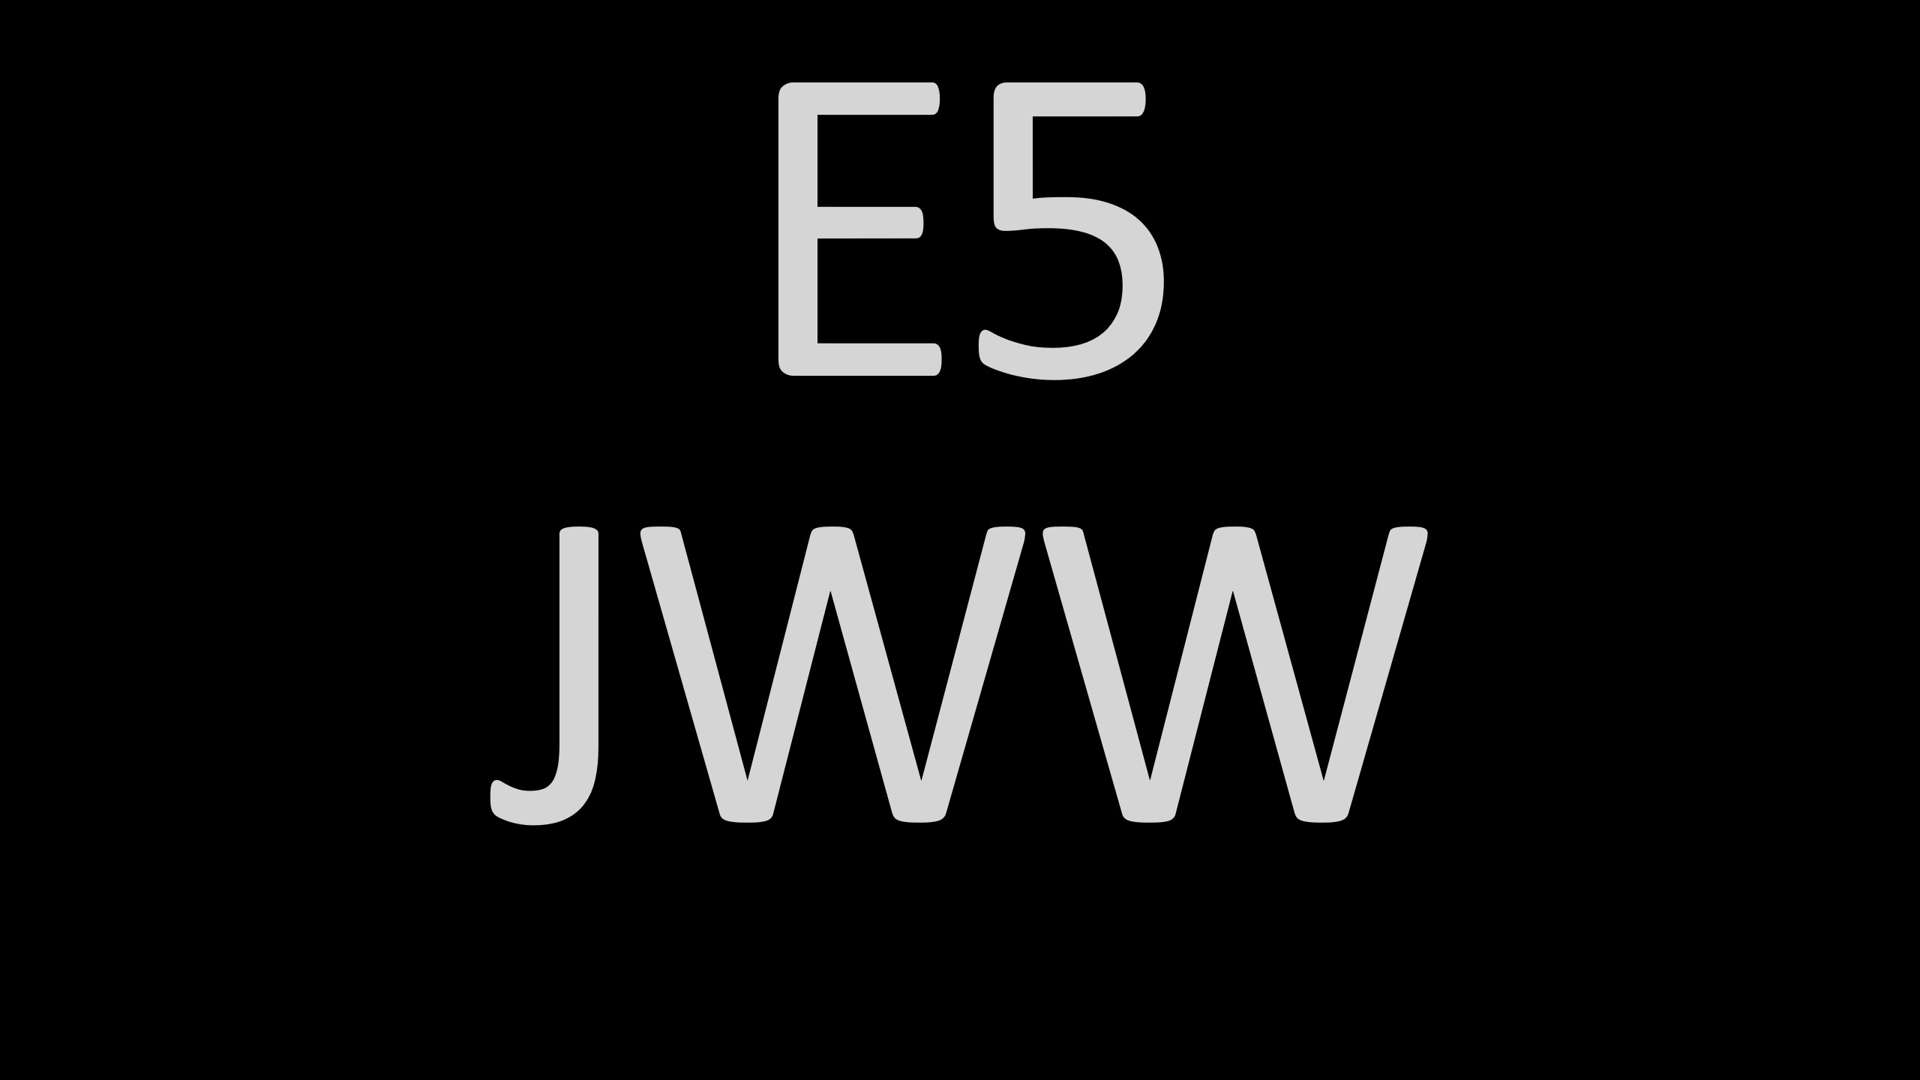 <p>E5 JWW Registration number&nbsp;</p>